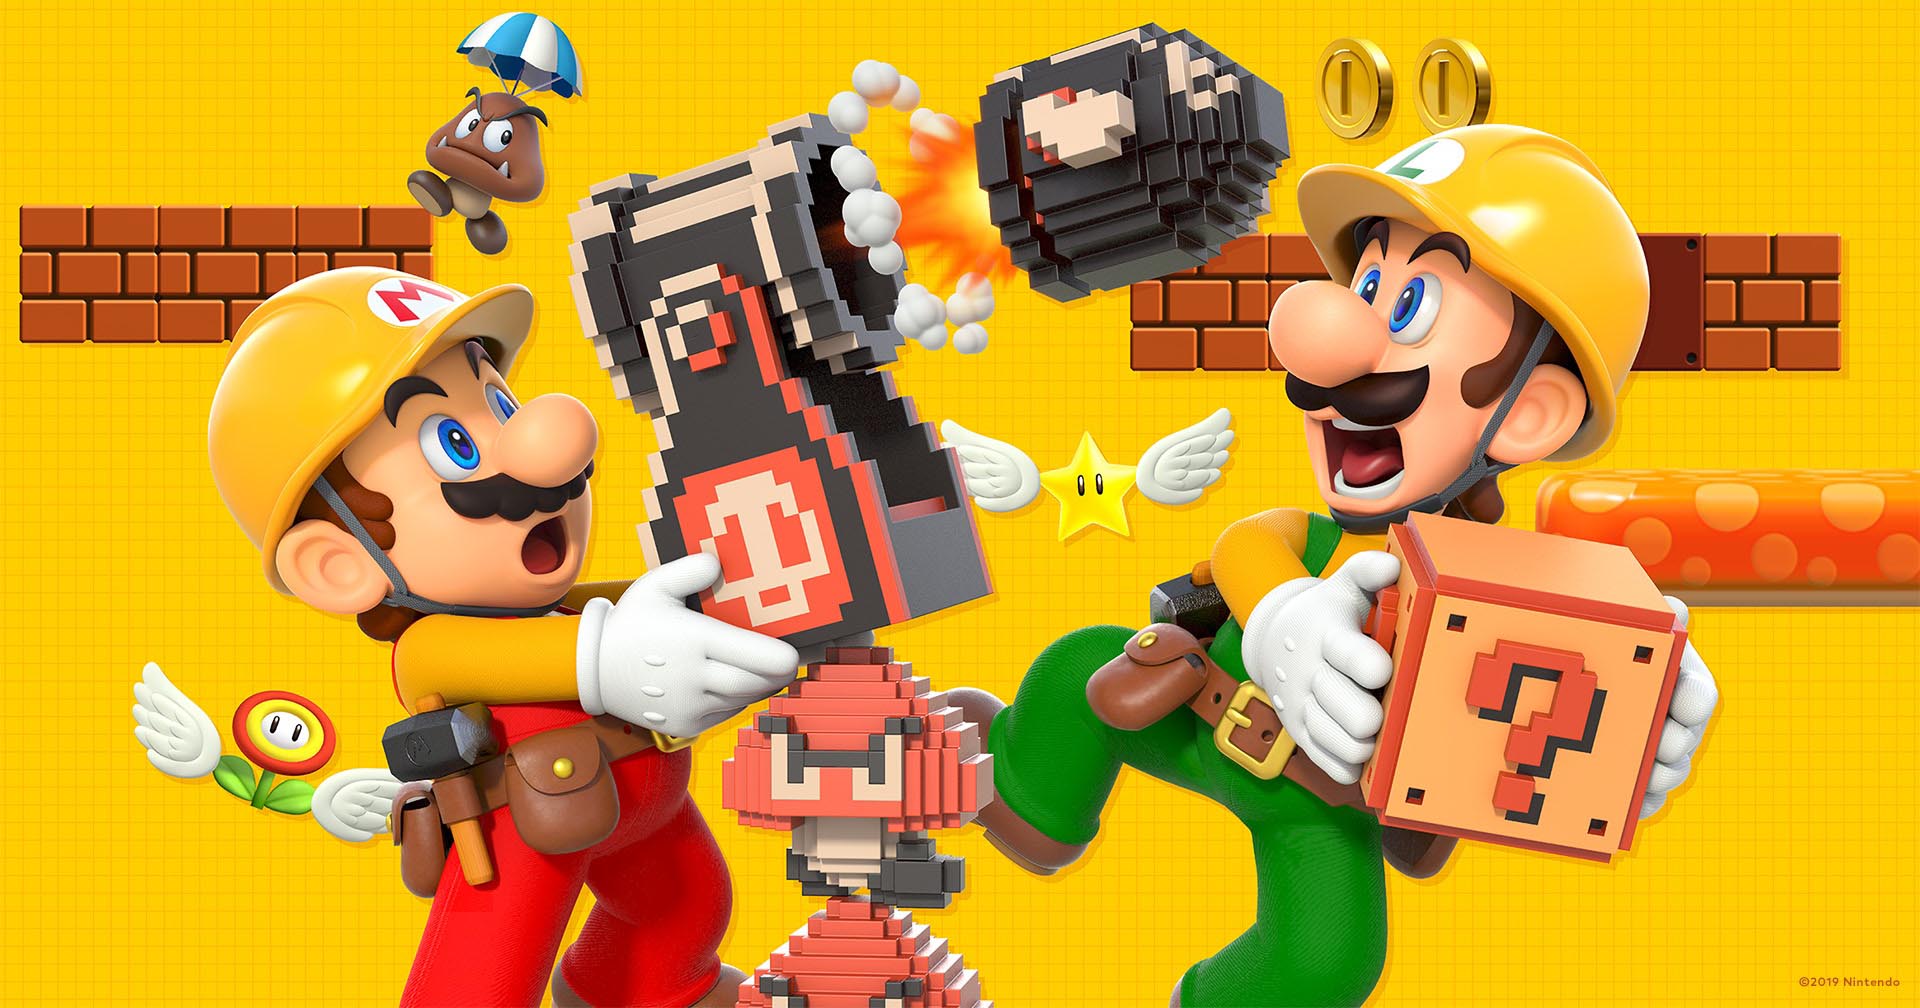 Nintendo สนใจสร้างแอนิเมชันเรื่องอื่นหลังการสร้าง ‘Mario’